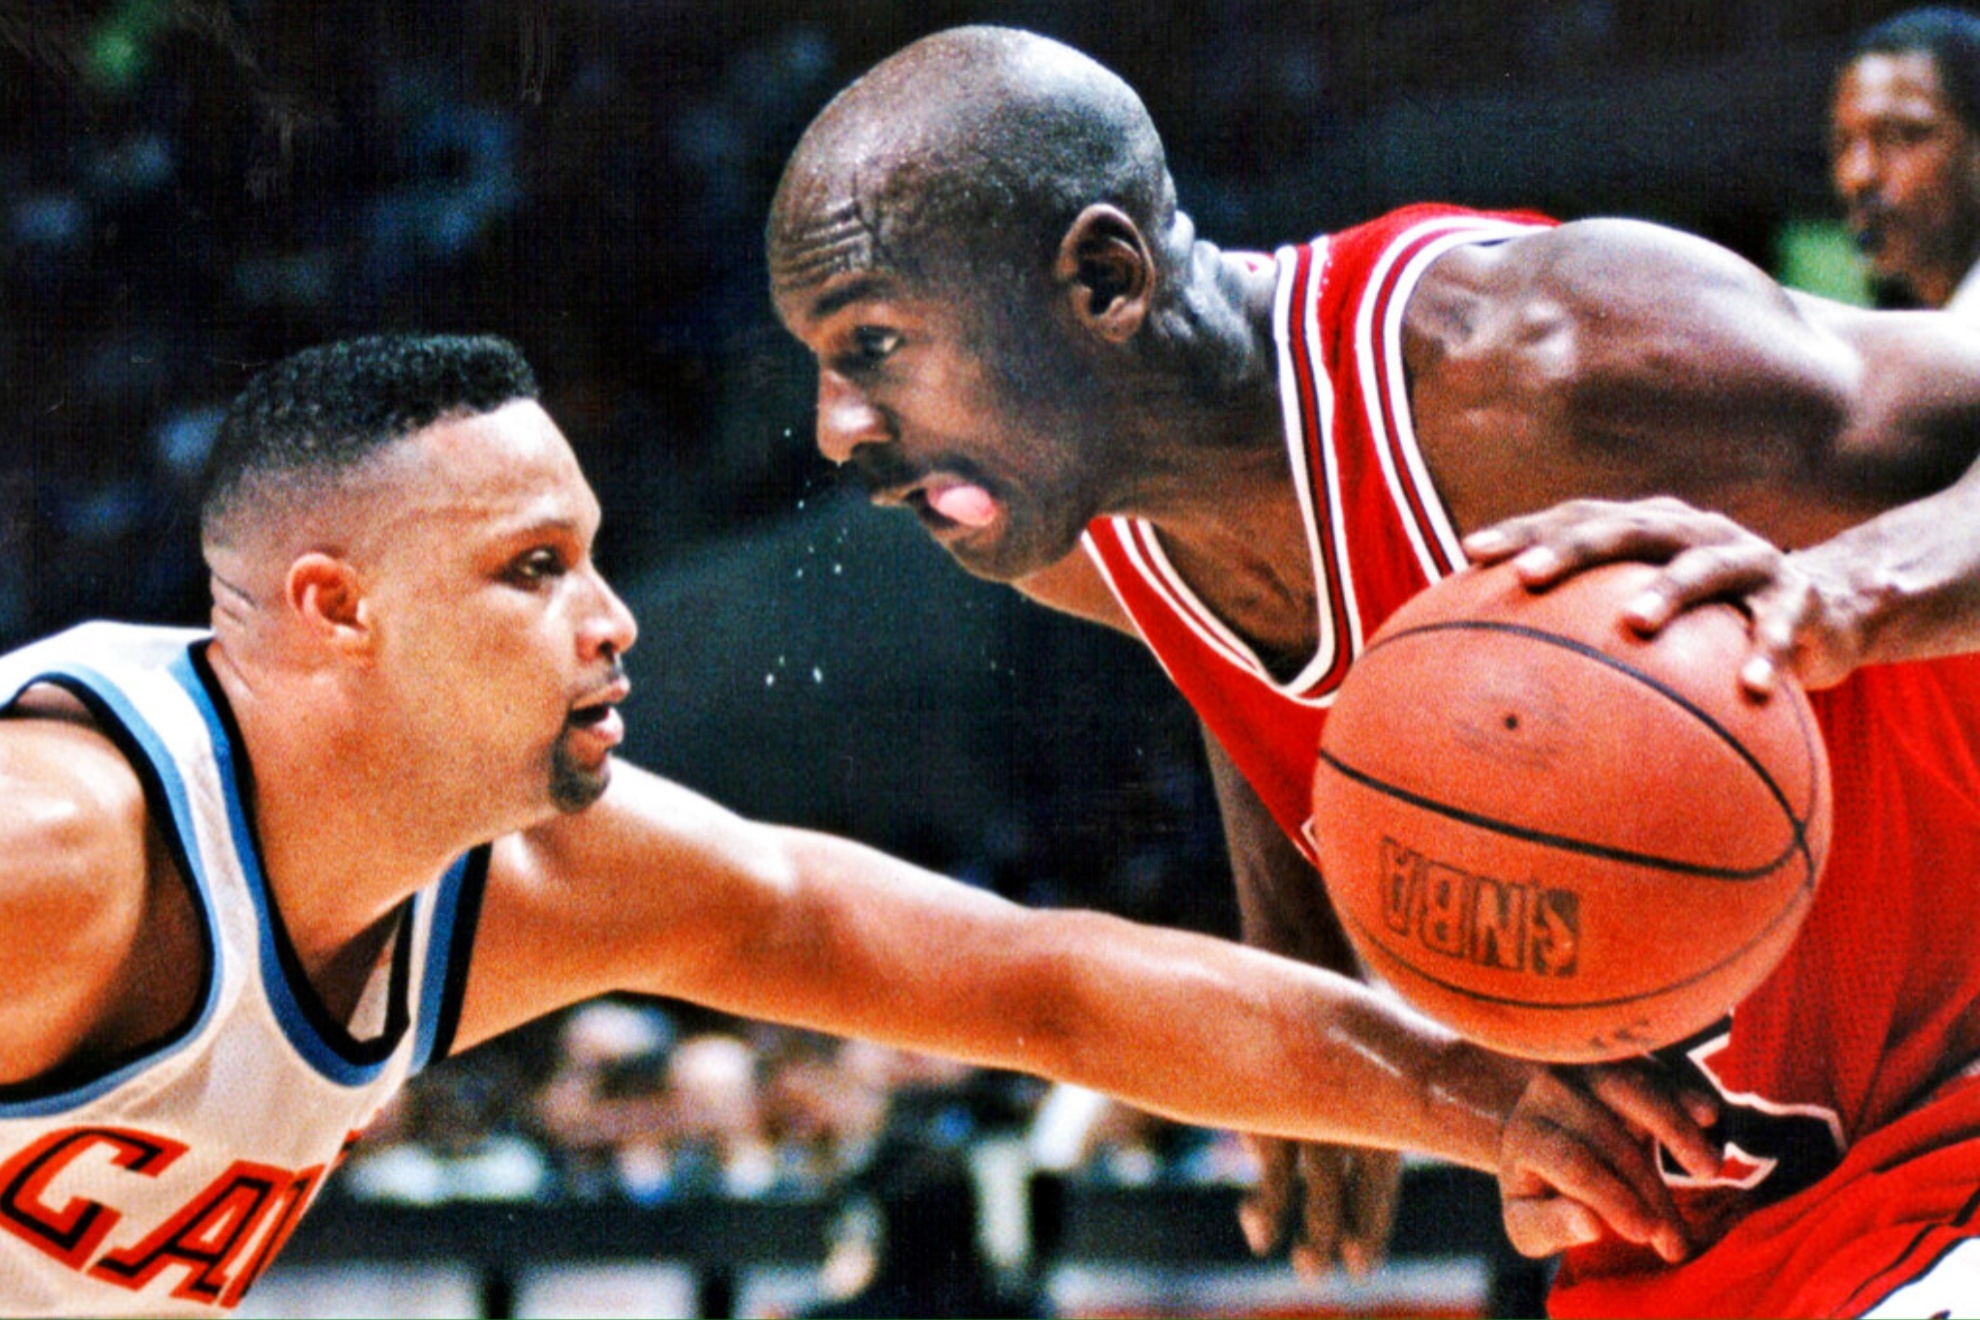 Michael Jordan scored 54 points in the NBA's Opening Night in 1989